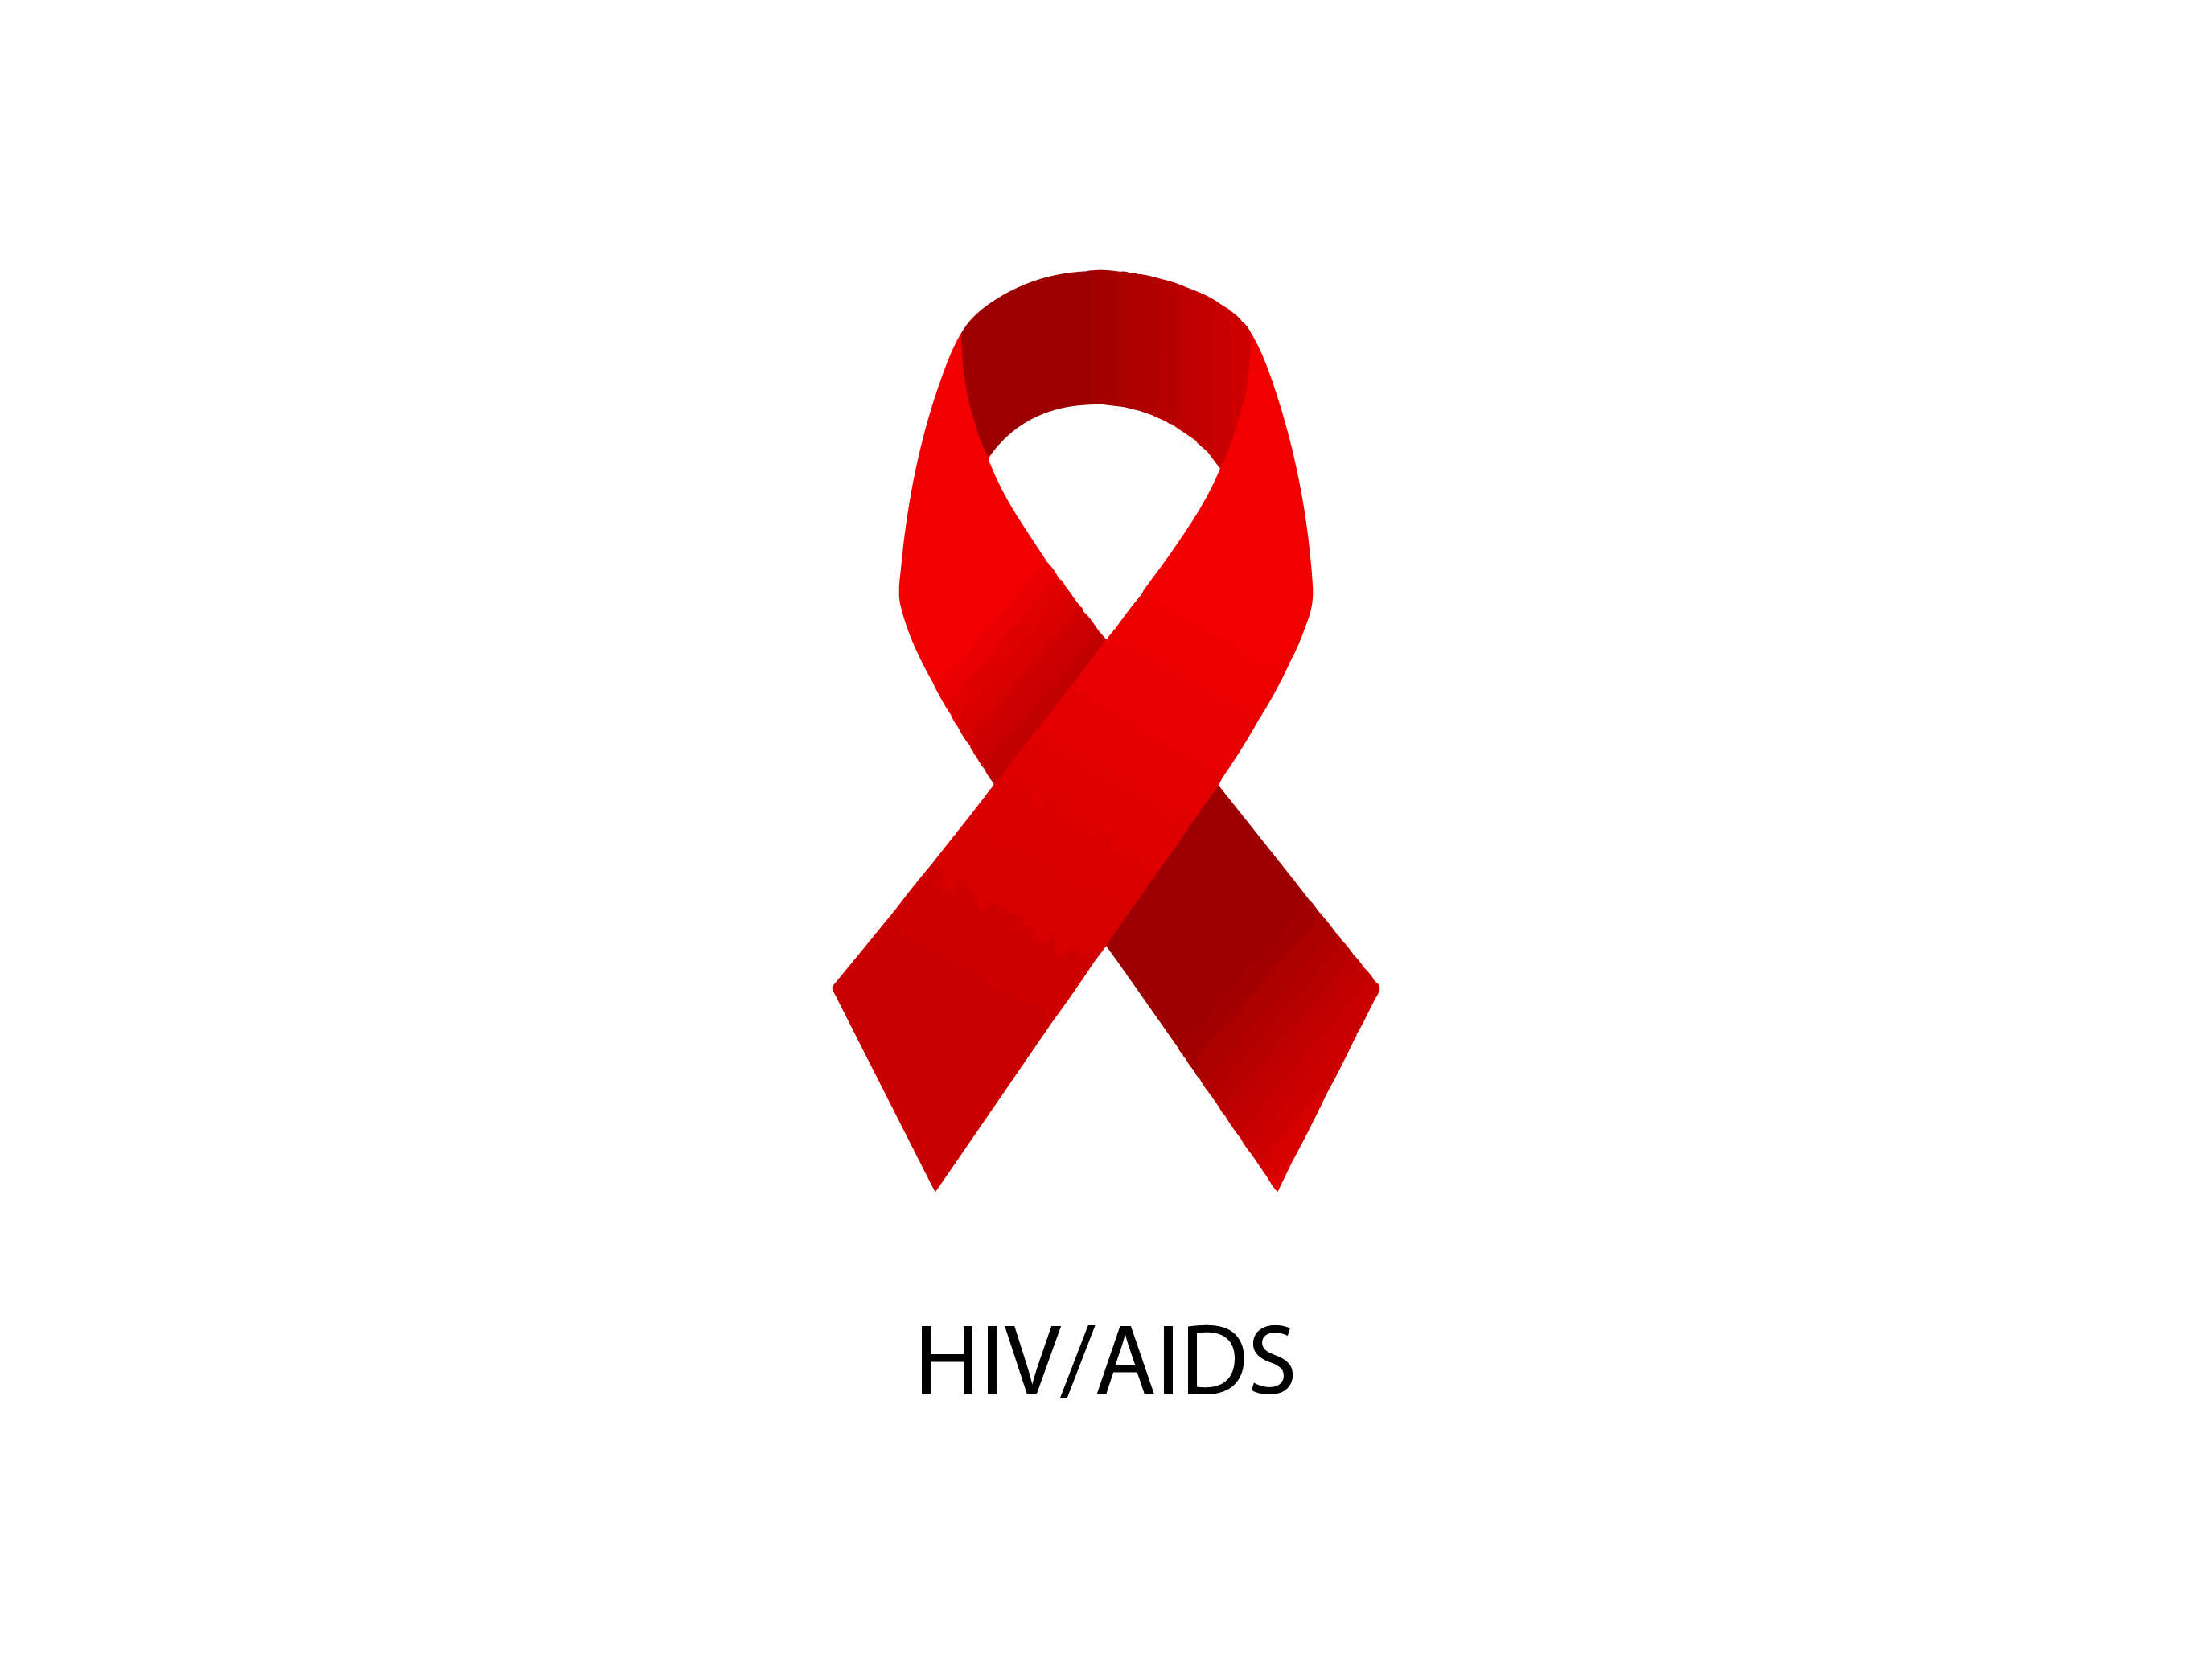 Ю вич. Значок СПИДА. СПИД логотип. Символ борьбы со СПИДОМ. Ленточка СПИД.